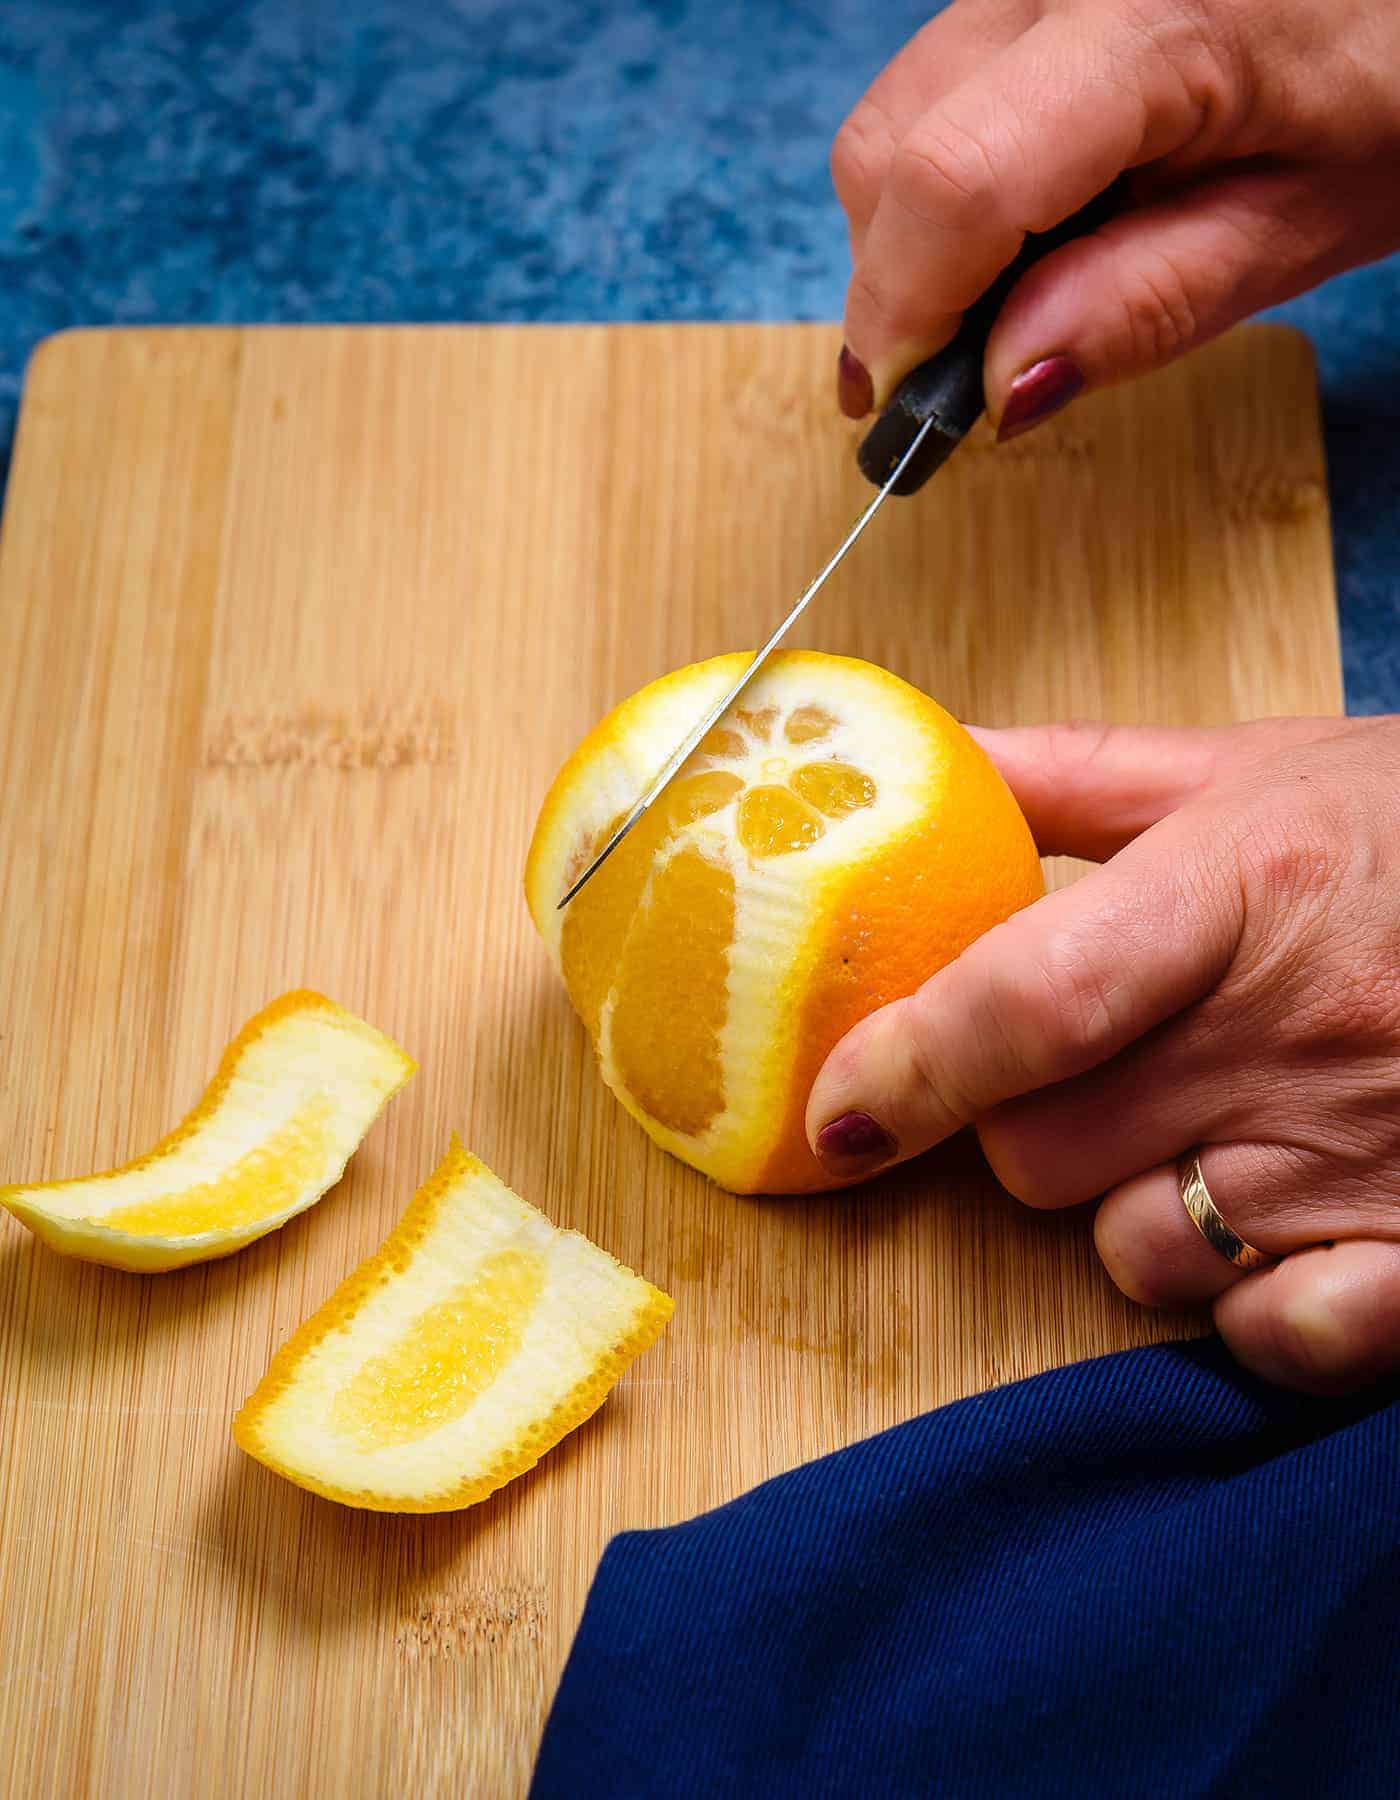 Slicing peel off orange